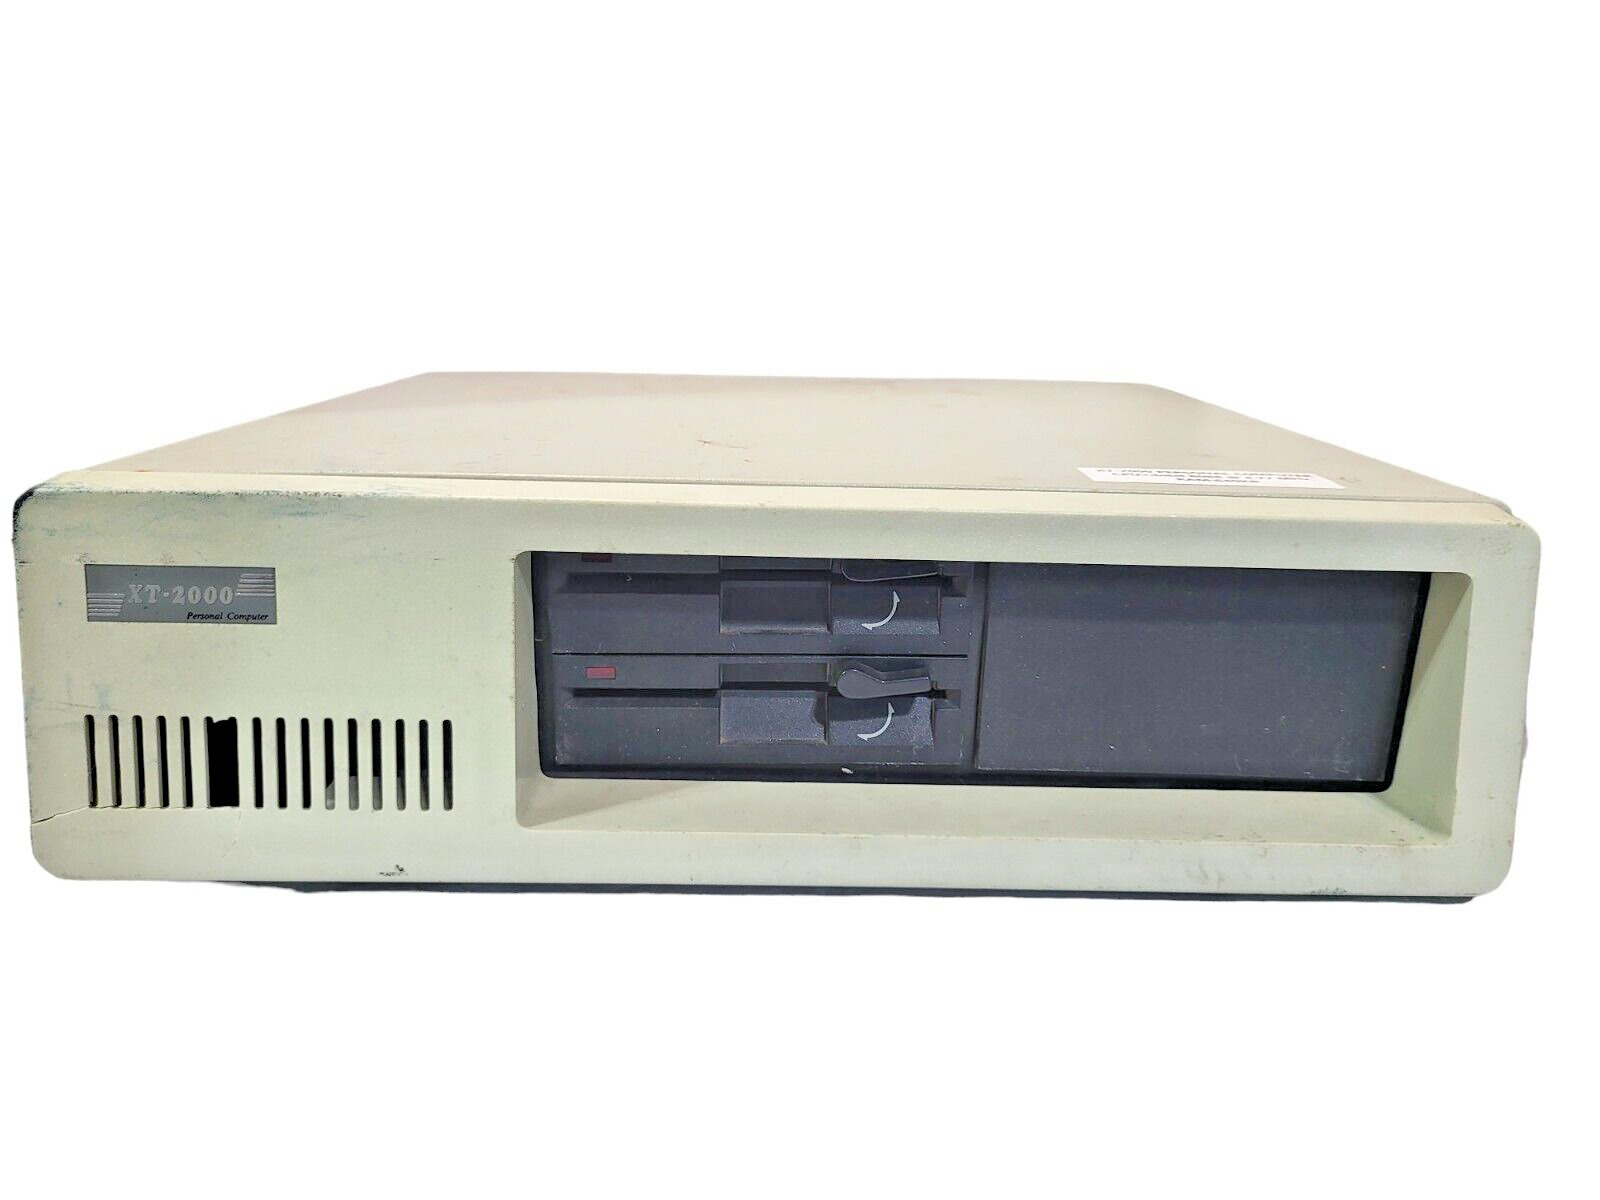 Very Rare Vintage IBM XT-2000 Personal Computer Retro Desktop PC - UNTESTED